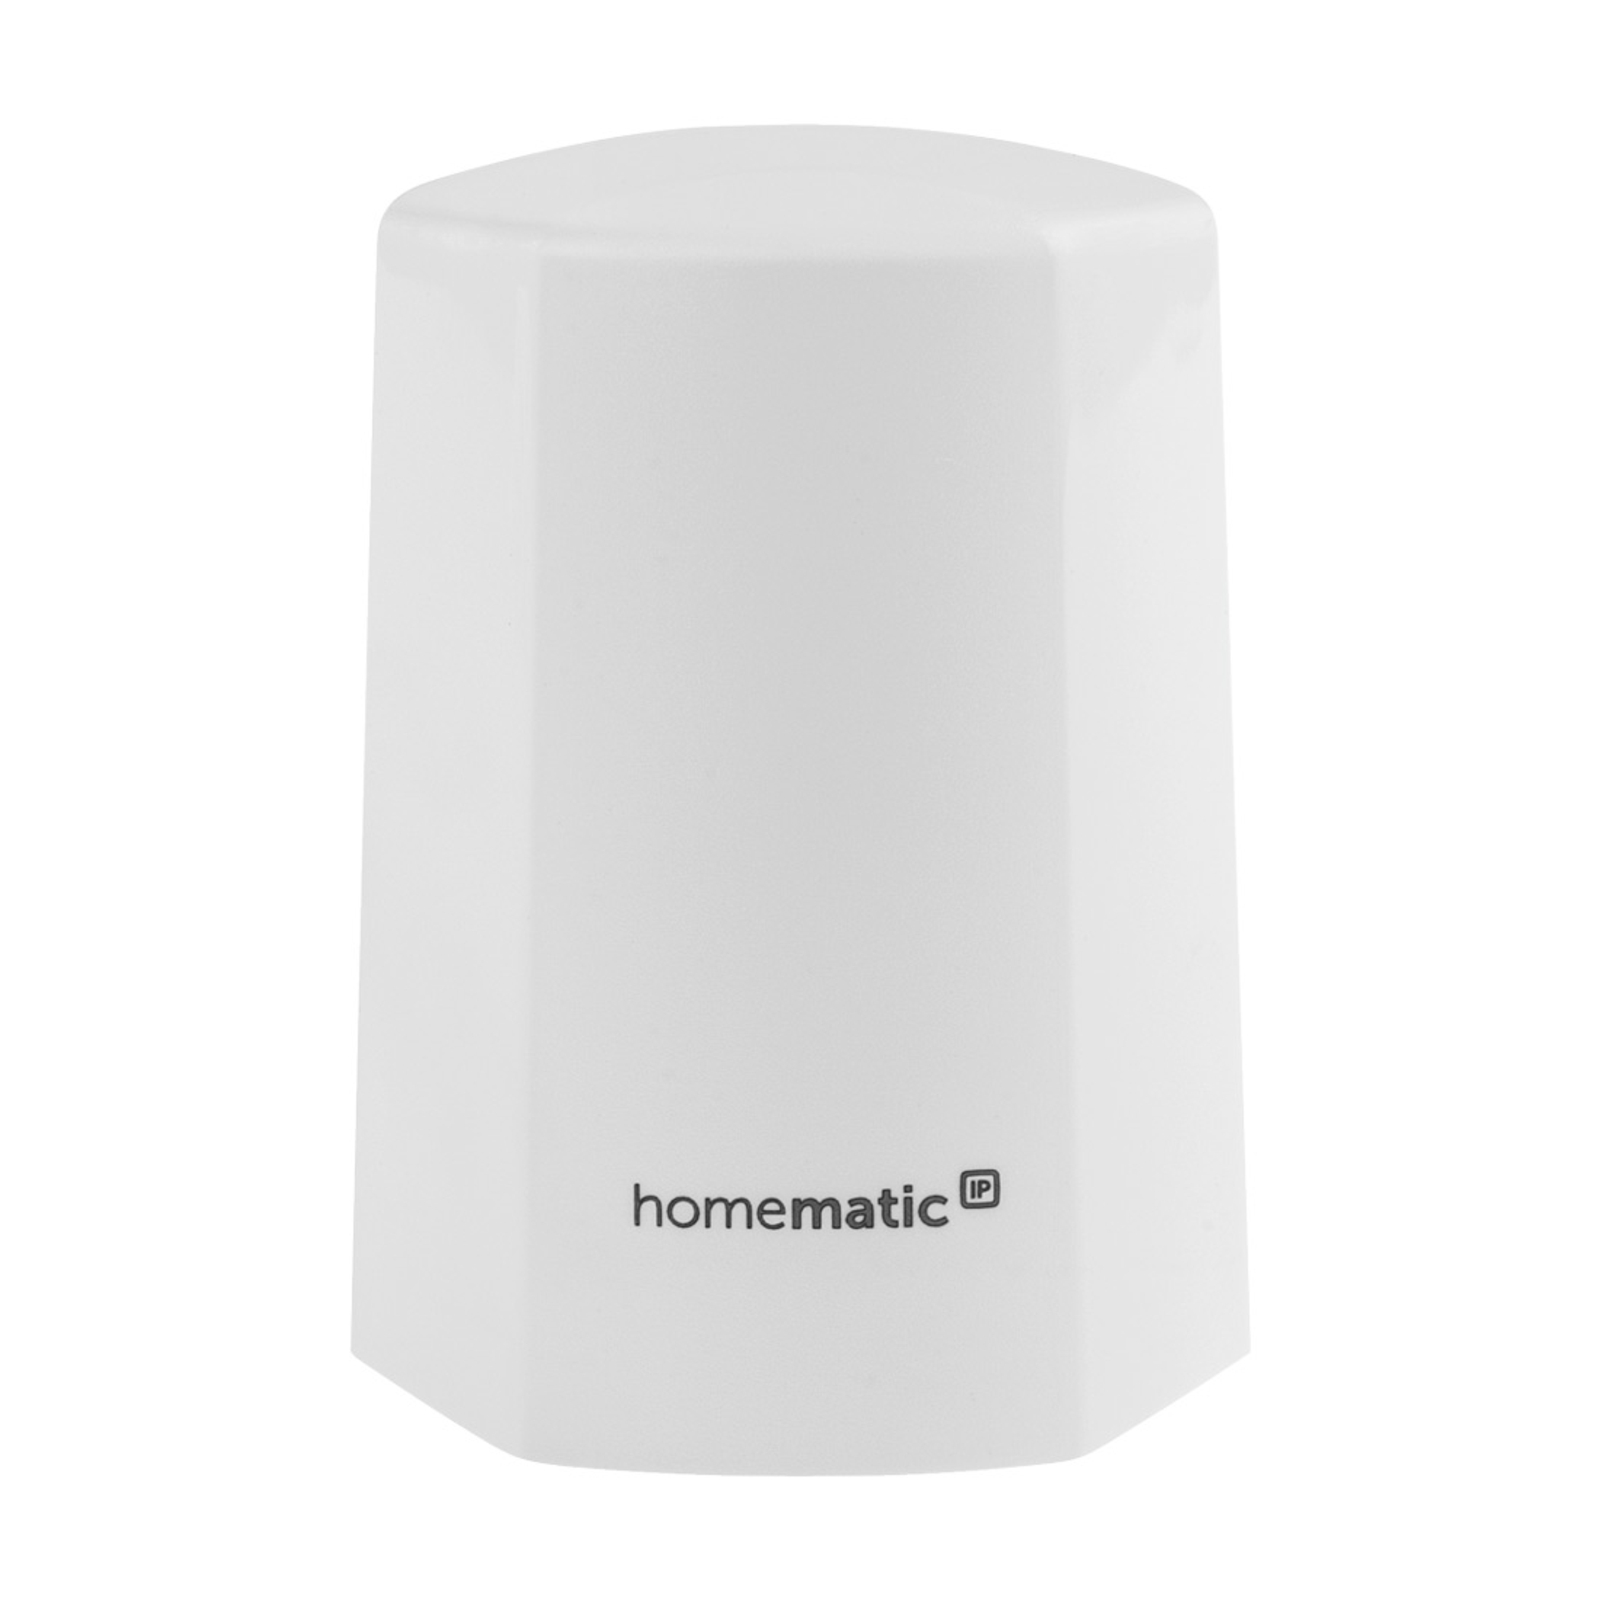 Homematic IP temperature/humidity sensor, white